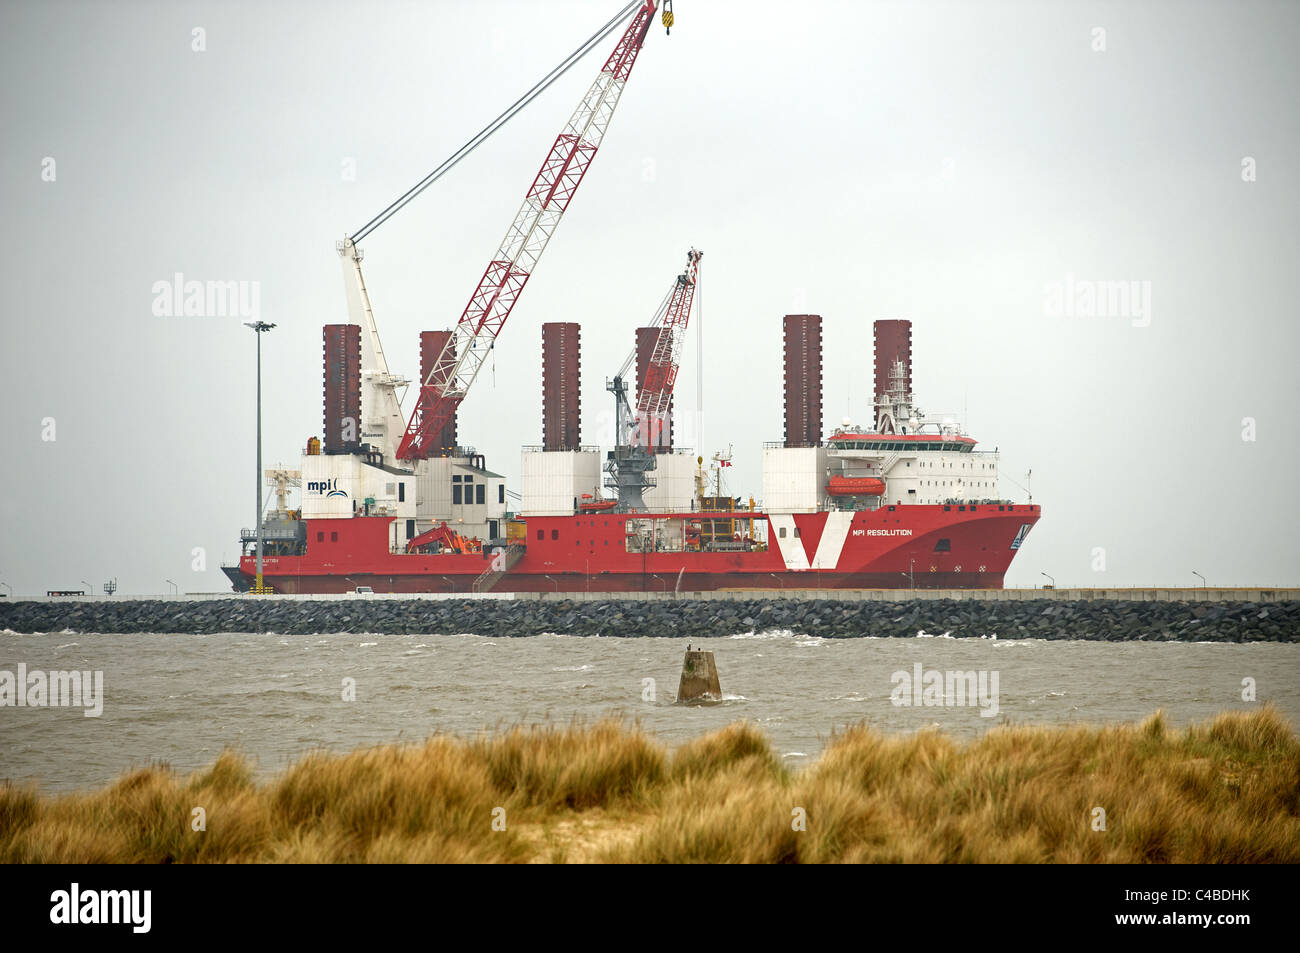 MPI Resolution, a wind turbine installation vessel, Great Yarmouth, Norfolk, UK. Stock Photo